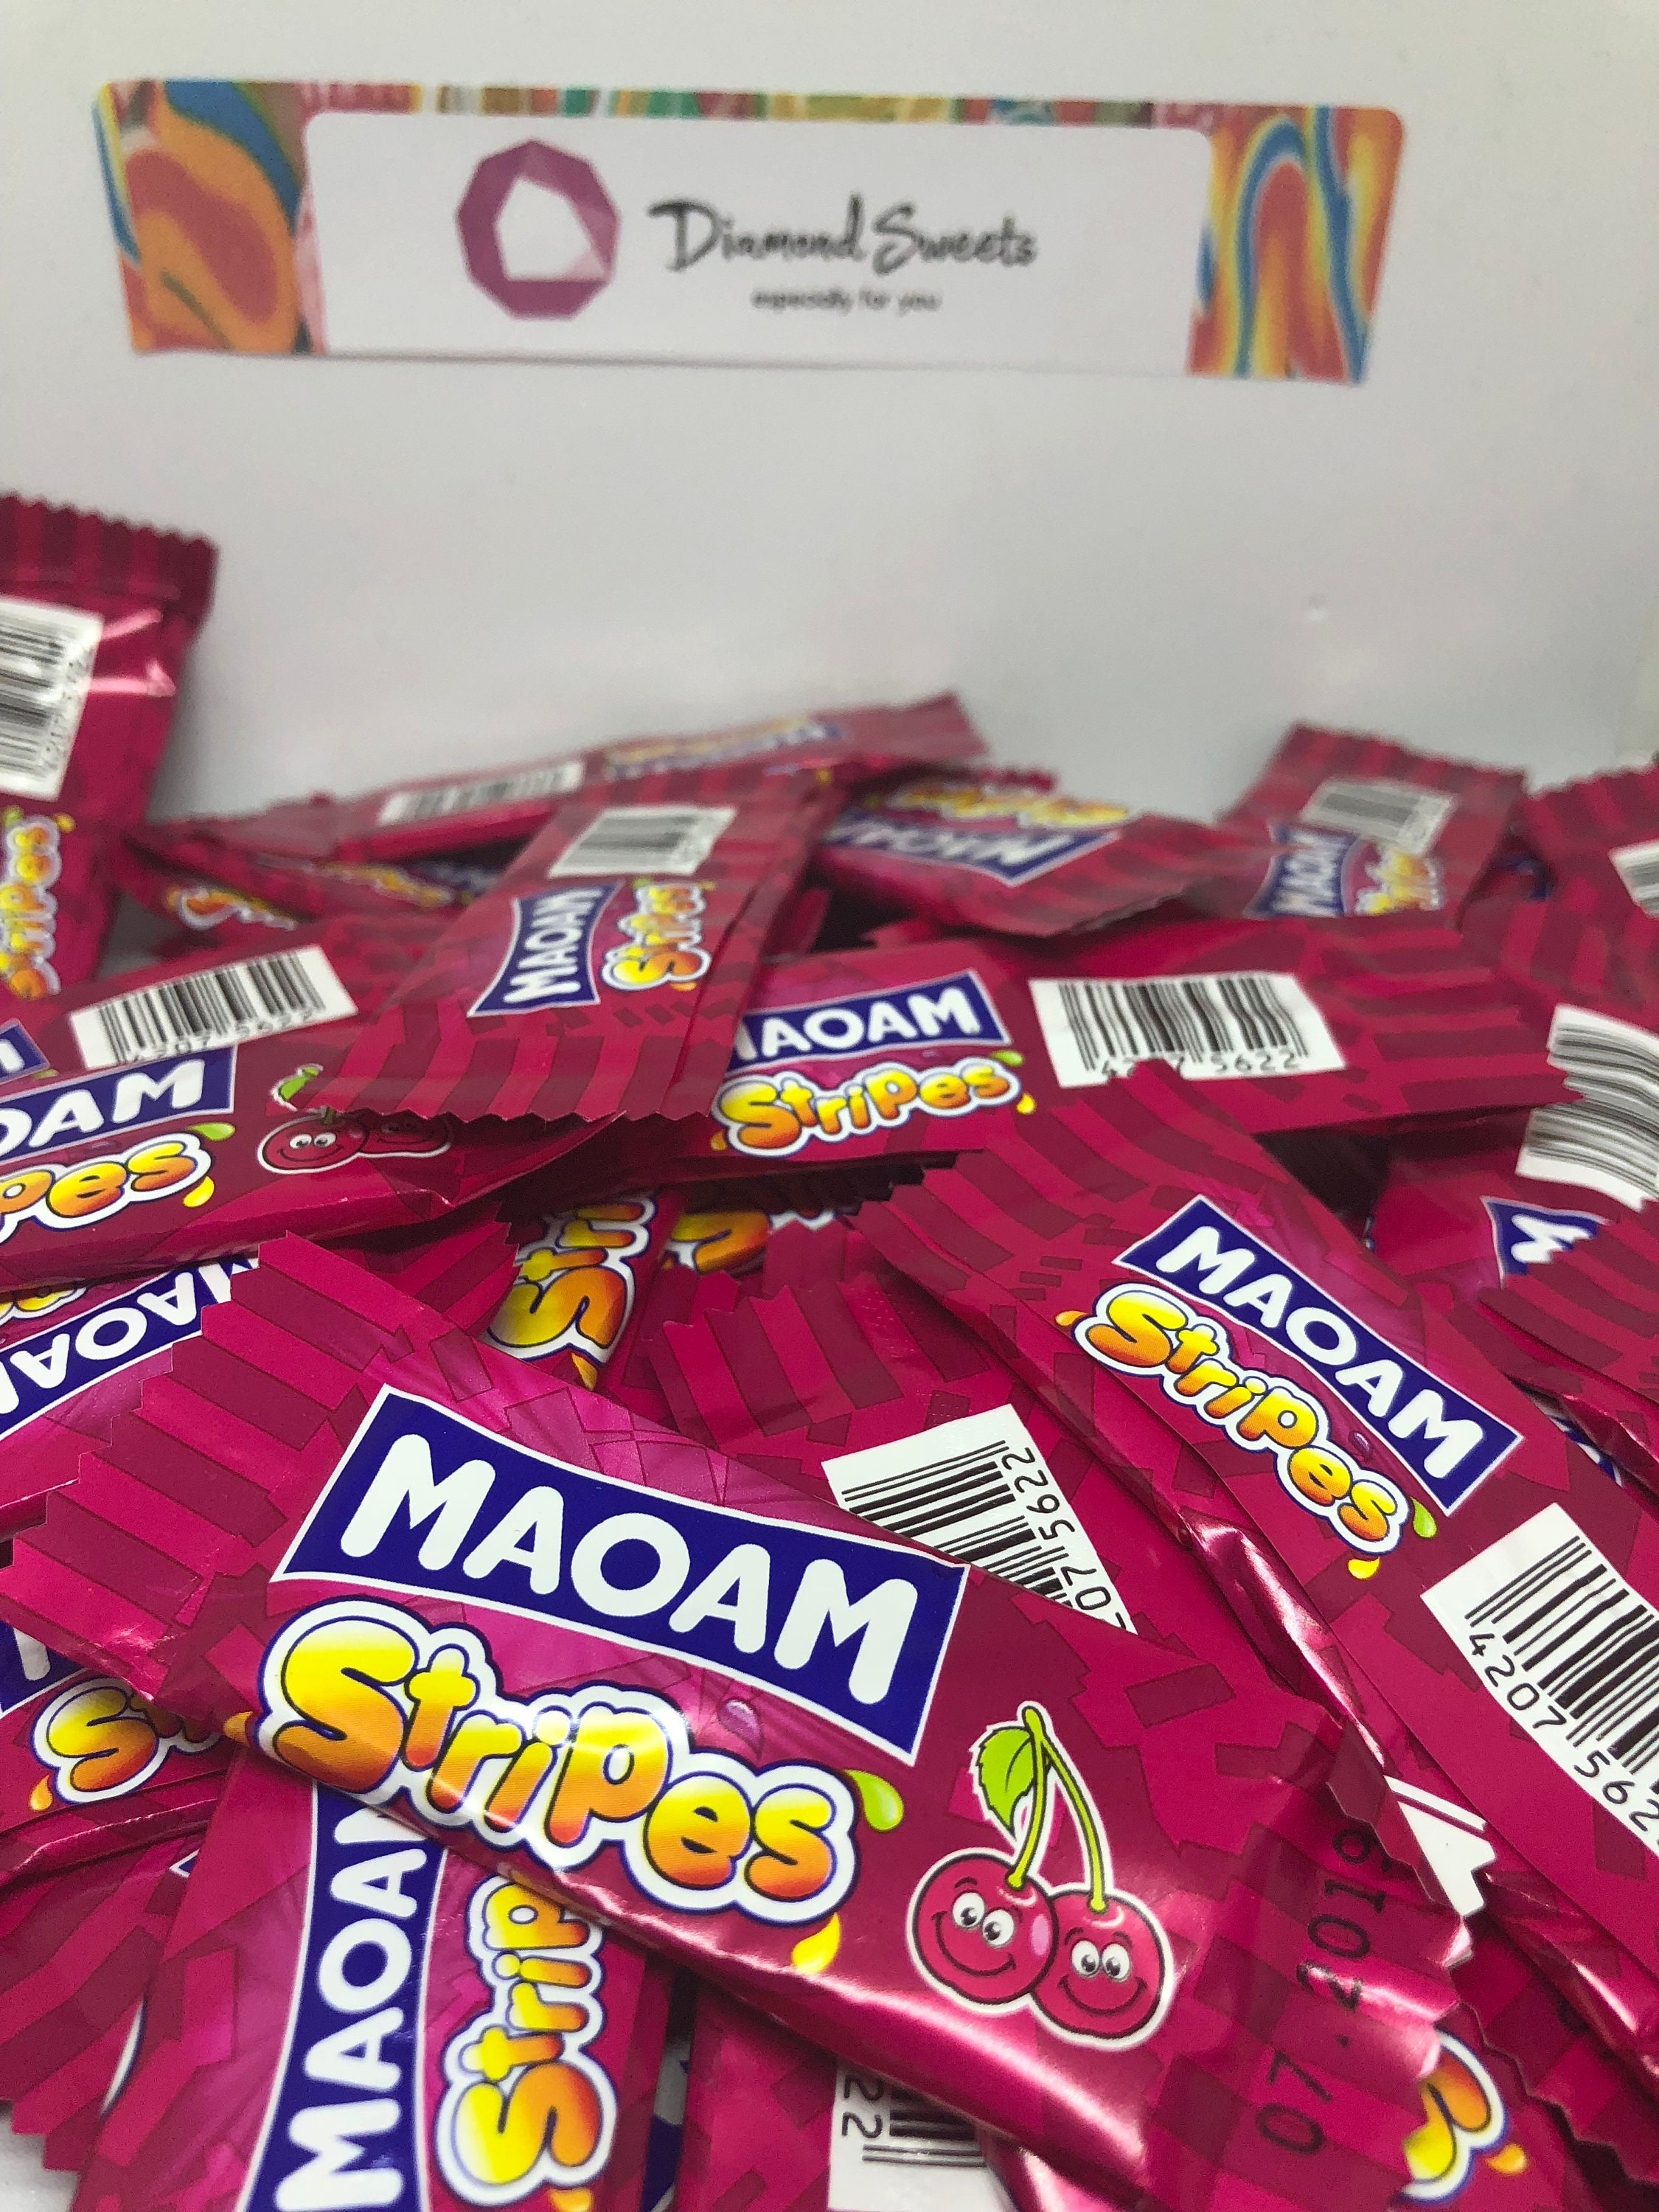 100 X Haribo Maoam Stripes by Diamond Sweets Choose Your Own Flavour,  Strawberry, Raspberry, Orange, Apple, Cherry or Random Mix 